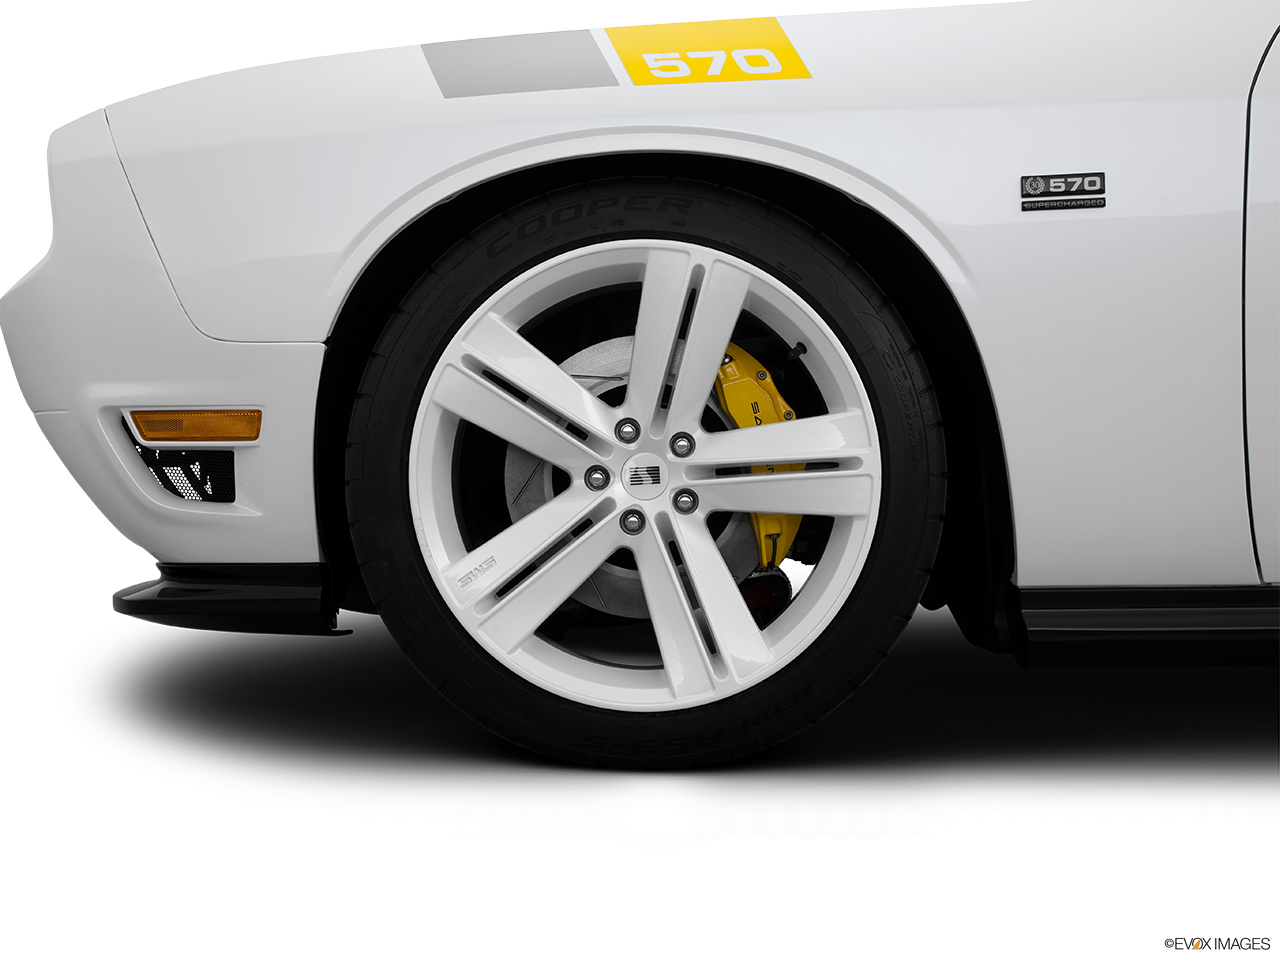 2014 Saleen 570 Challenger Label 570 Black Label Front Drivers side wheel at profile. 